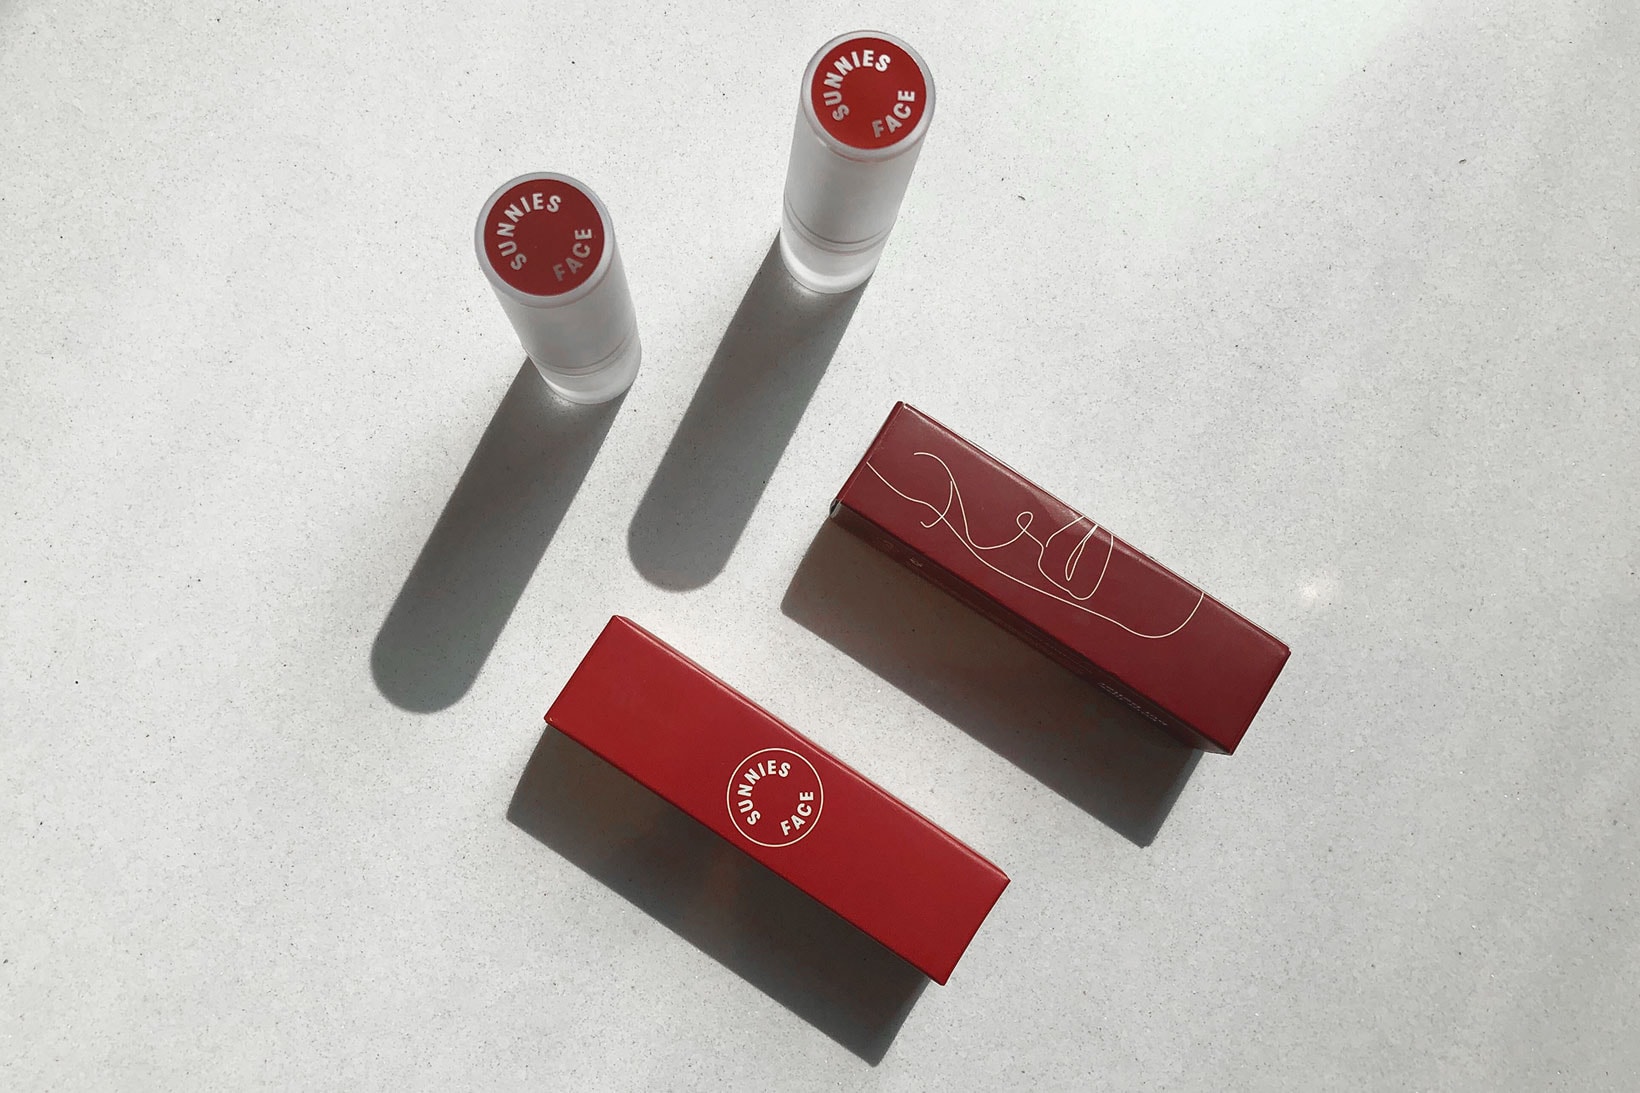 sunnies face fluffmatte red lipstick makeup philippines beauty cosmetics